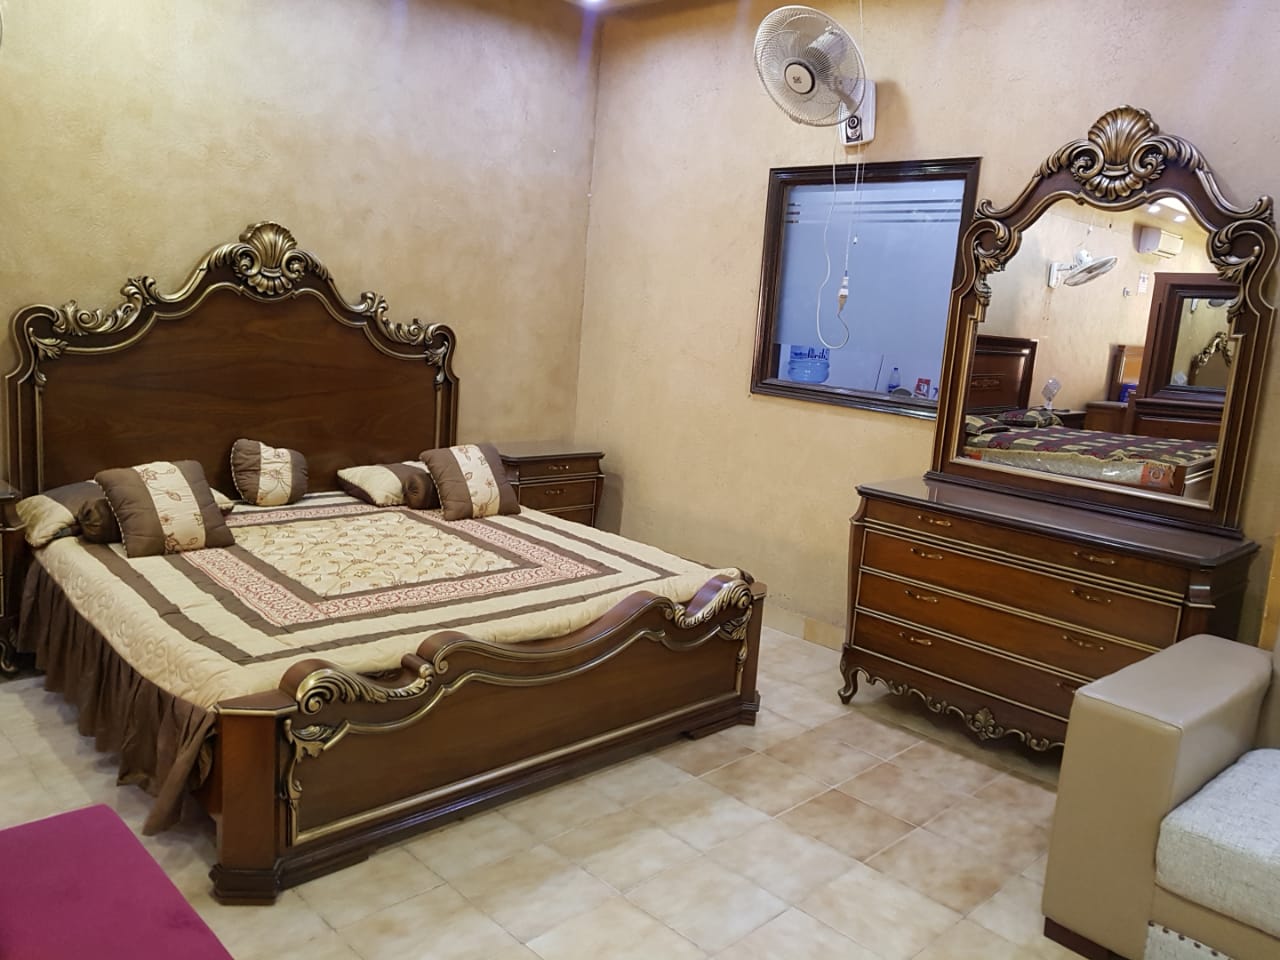 full bedroom furniture price in pakistan